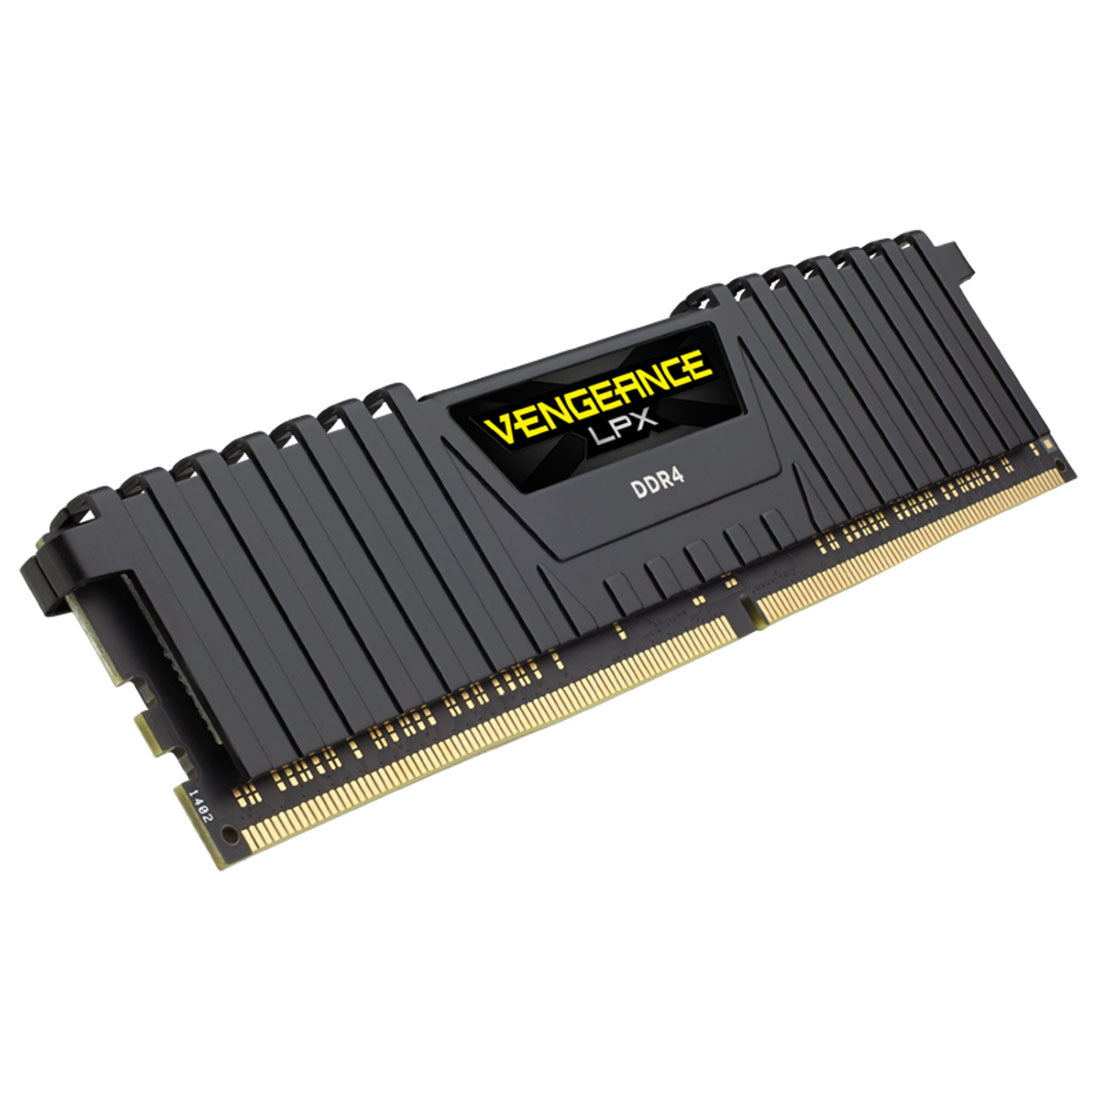 Corsair Vengeance LPX RAM DDR4 3000MHz डेस्कटॉप मेमोरी